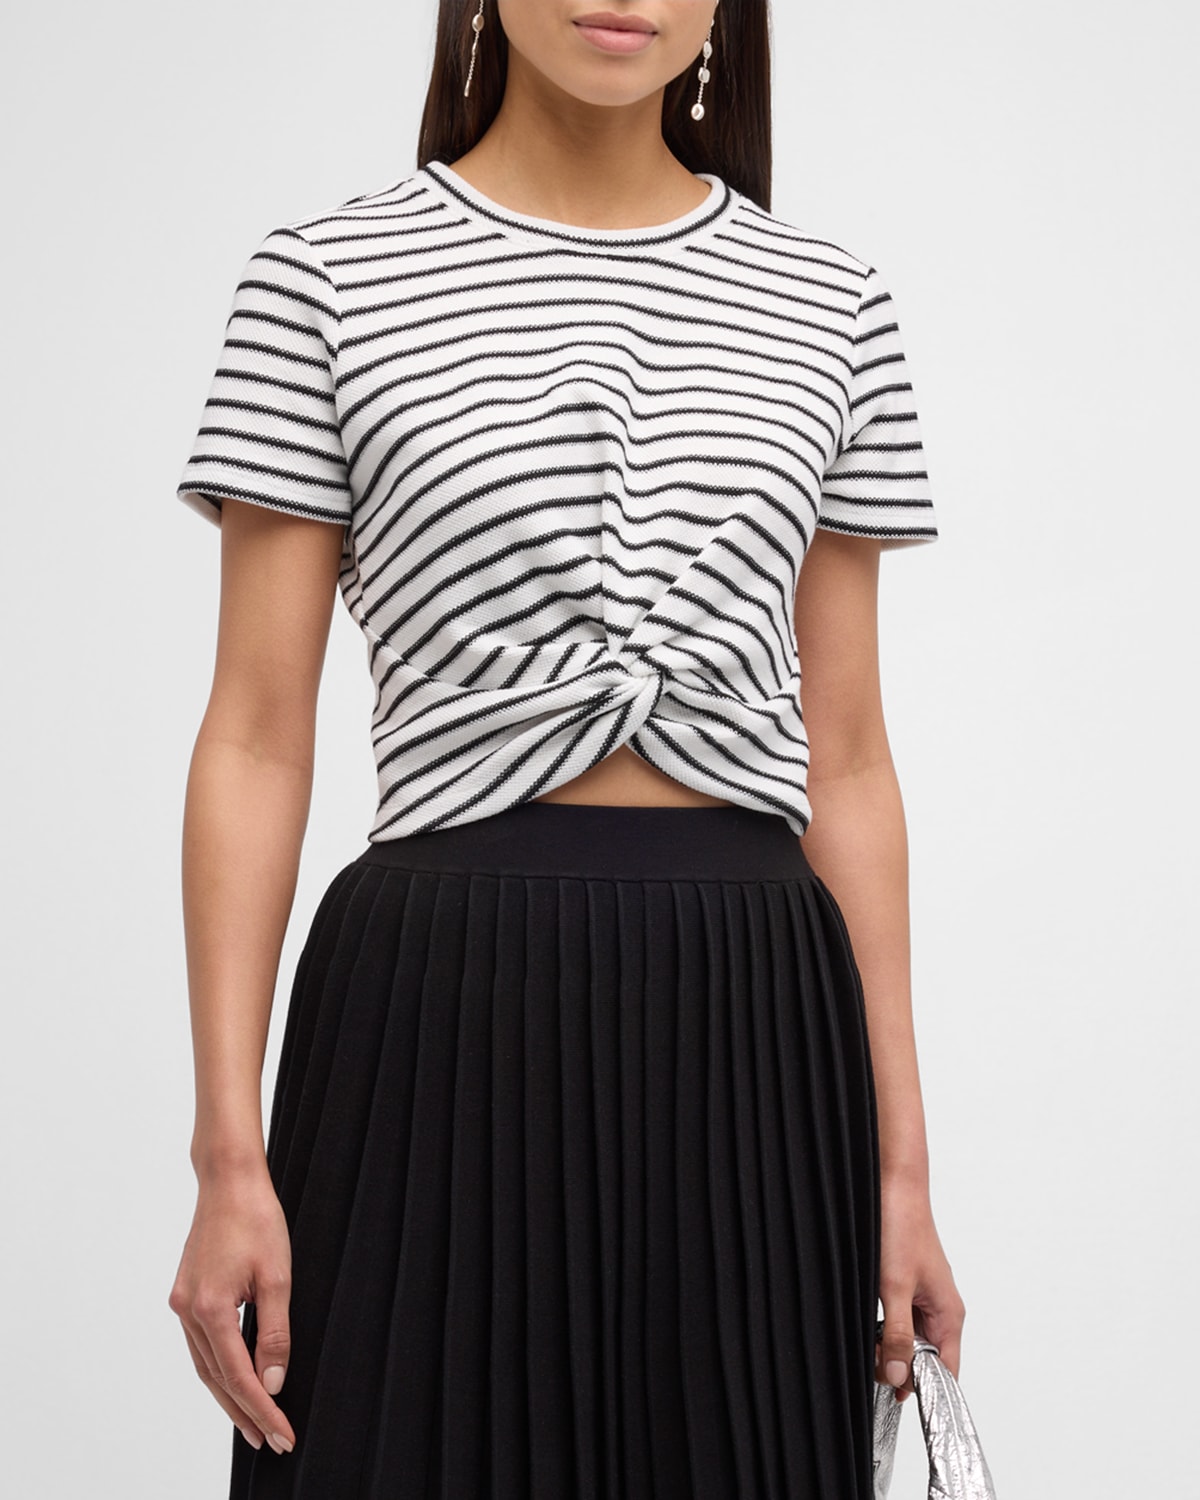 Zola Piqué Stripe Twisted Short-Sleeve Top